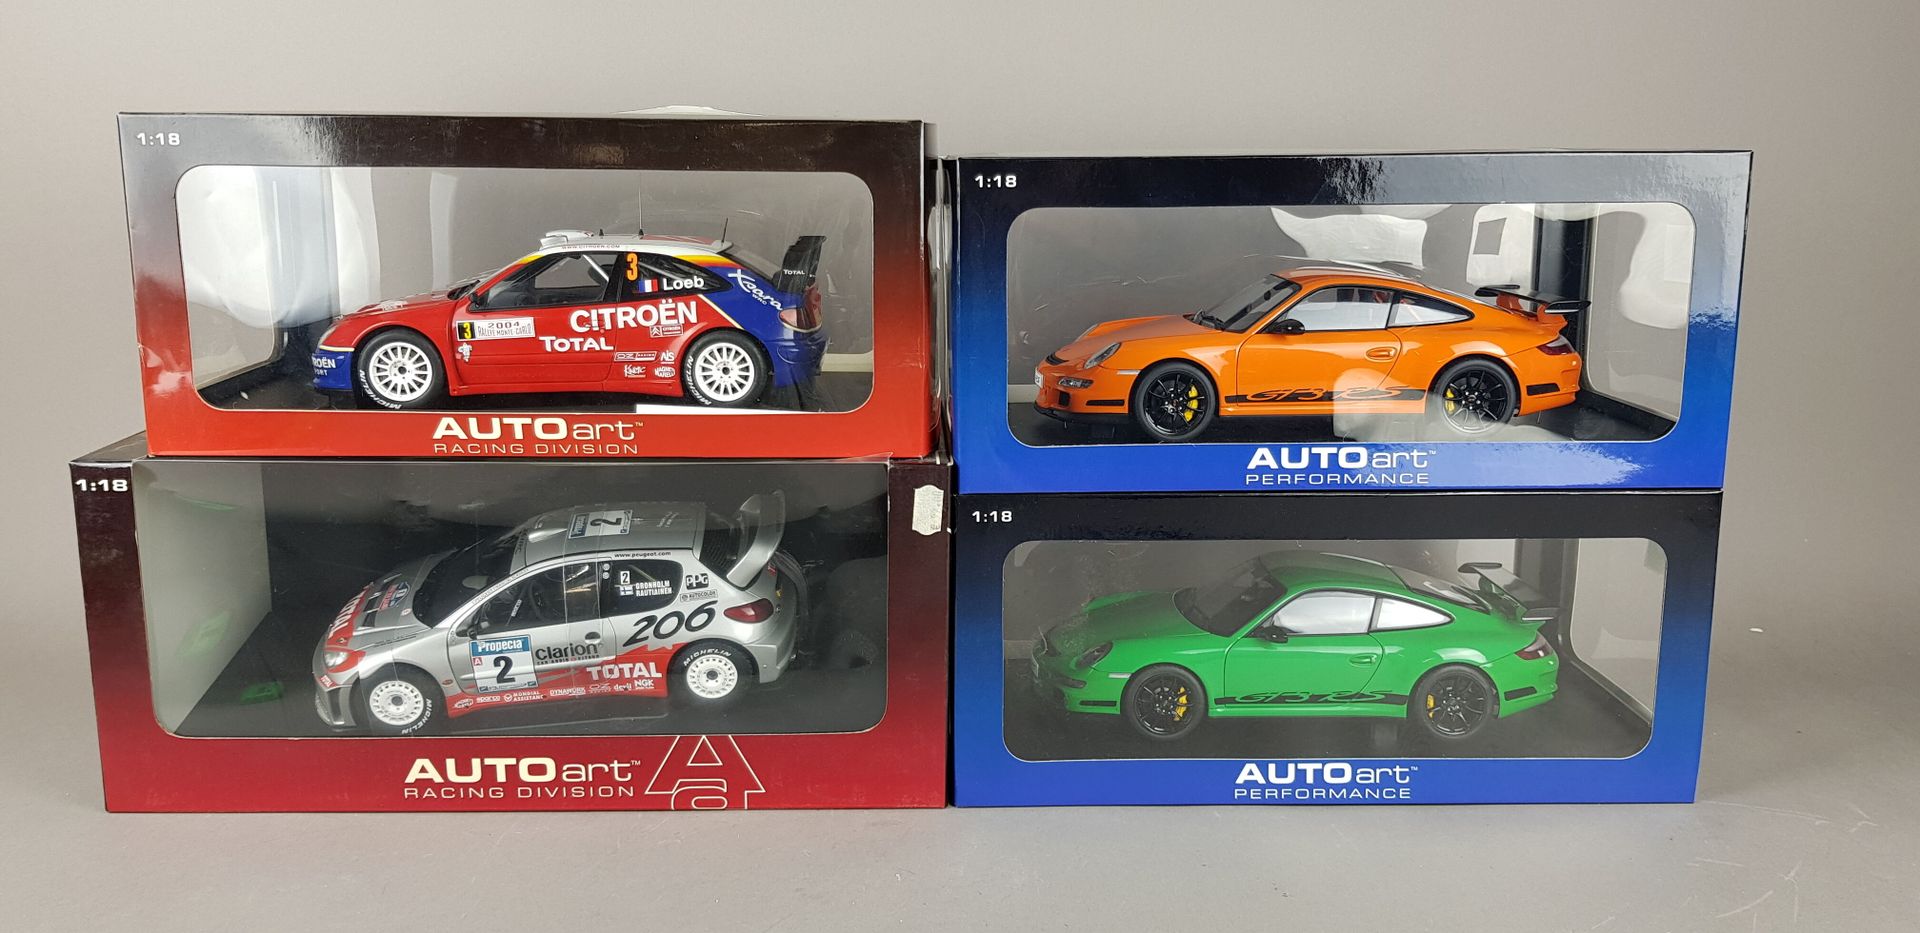 Null AUTO-ART性能 - 四辆1/18比例的汽车。

2辆保时捷997 GT3 RS（绿色和橙色

1x 雪铁龙XSARA WRC 2004

1x &hellip;